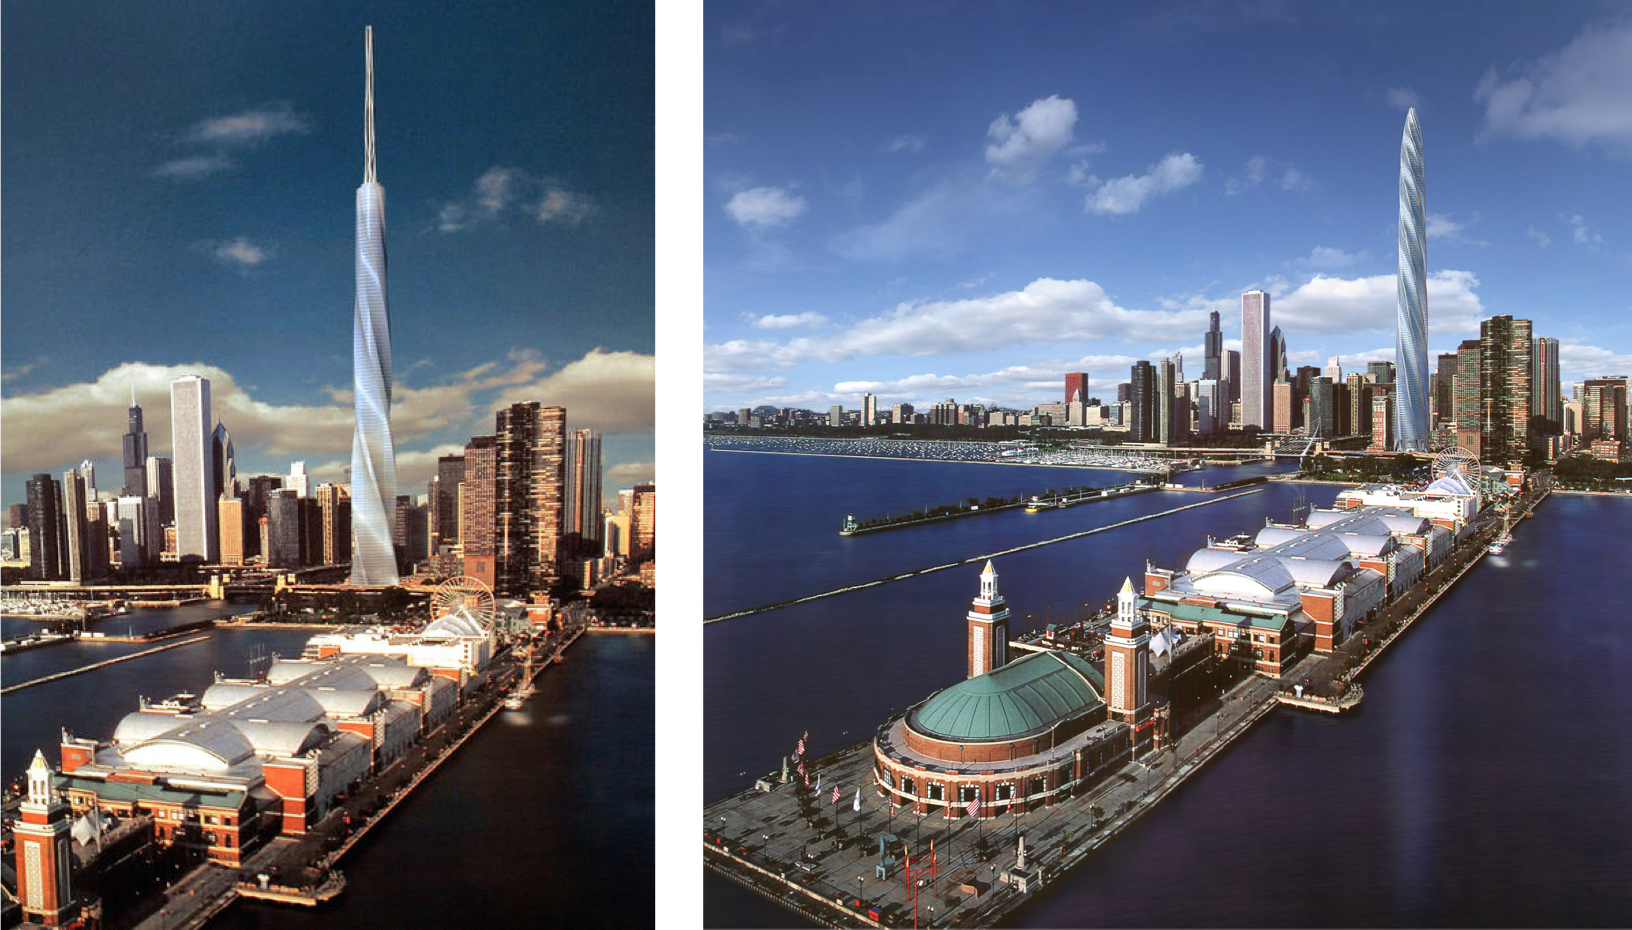 Original design of Chicago Spire (left) compared to final design (right)